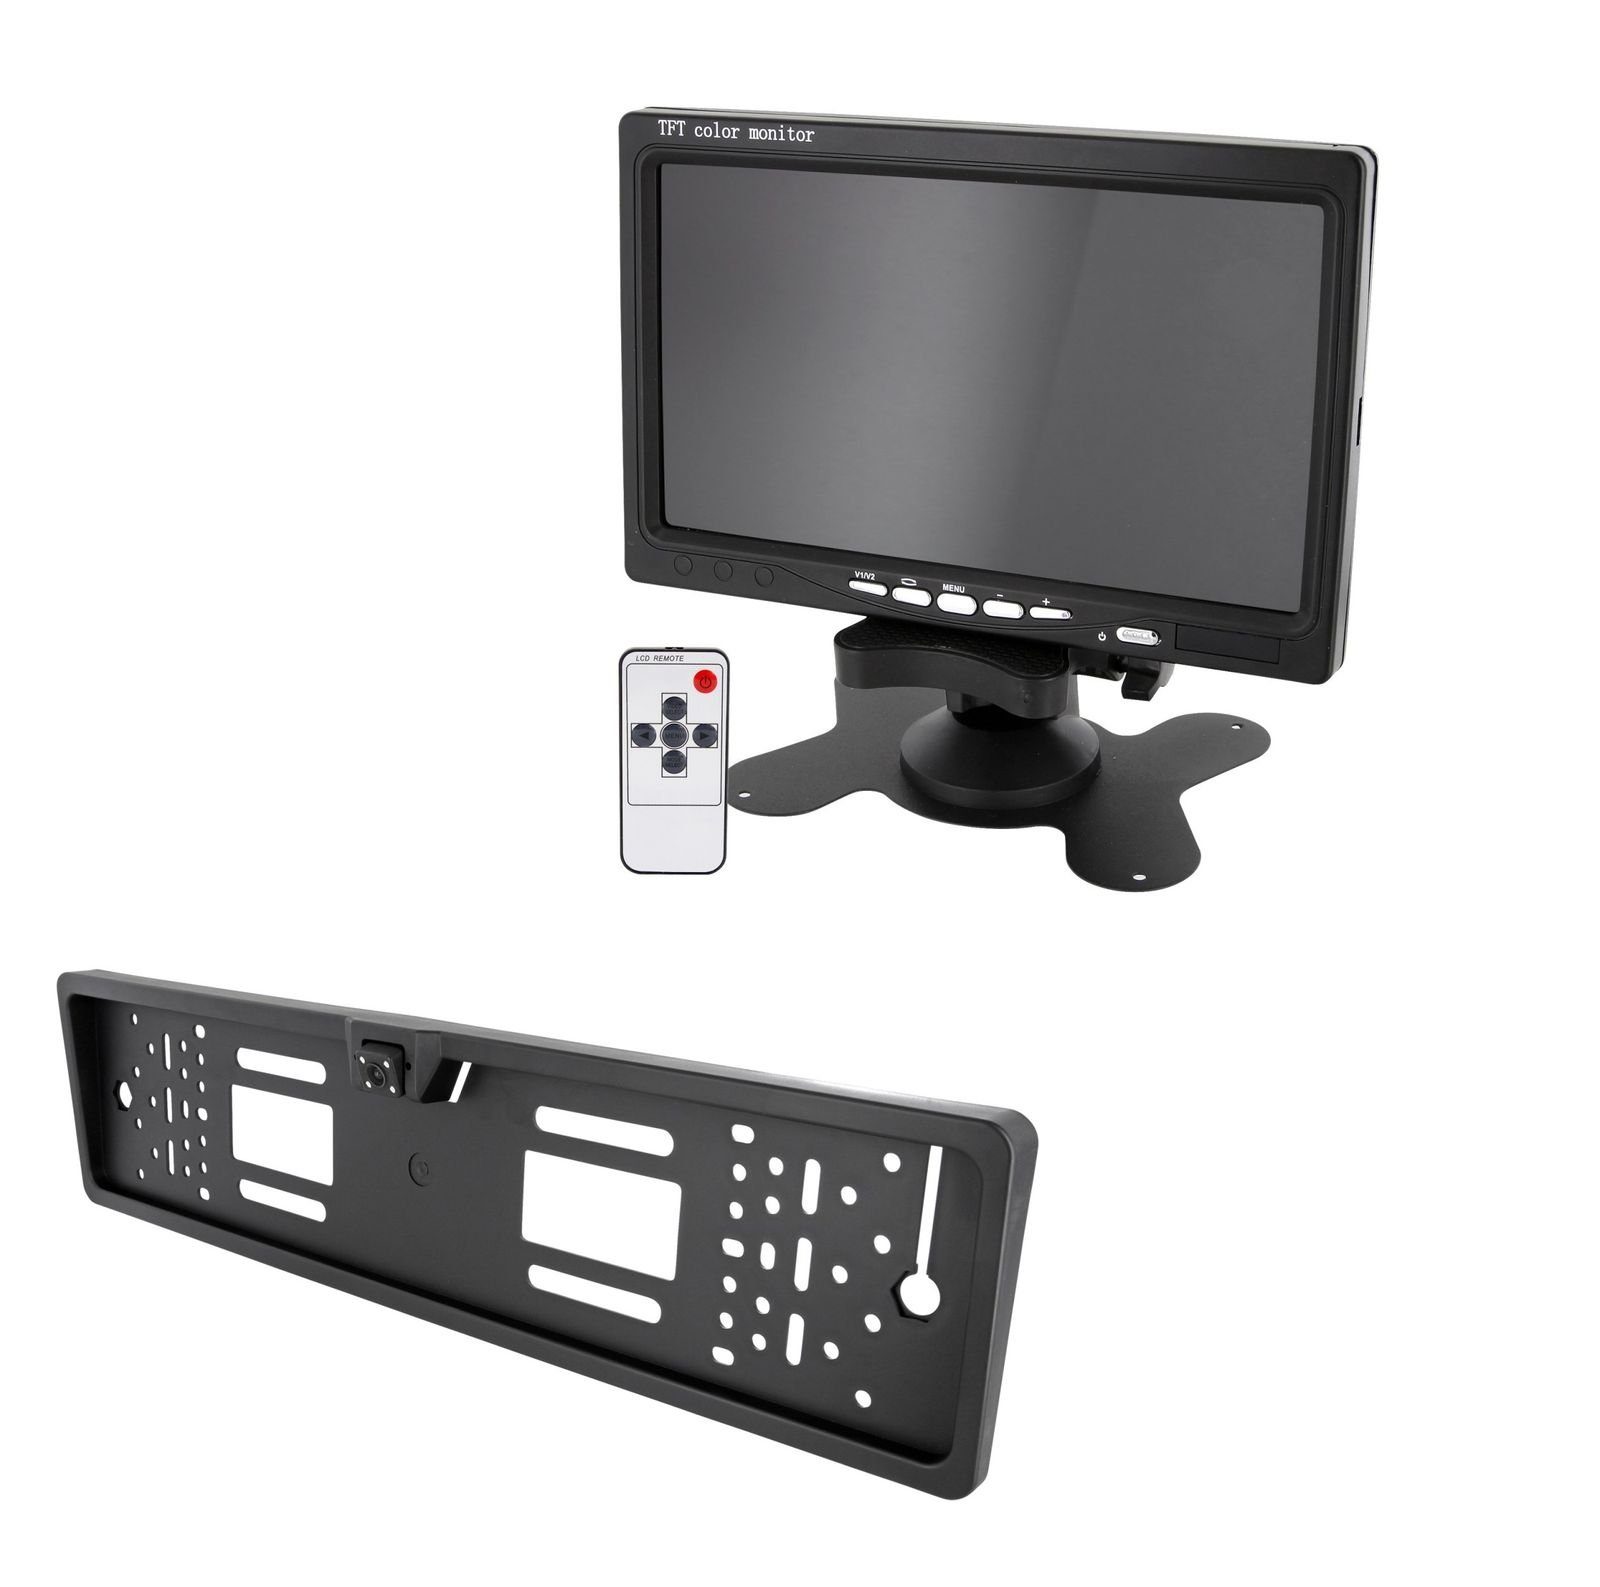 170°, Rückfahrsystem Rückfahrkamera, integriert) in einer Monitor CARMATRIX 7" mit Kennzeichenhalterung (Auto CM-390 Nummernschild Rückfahrkamera HD